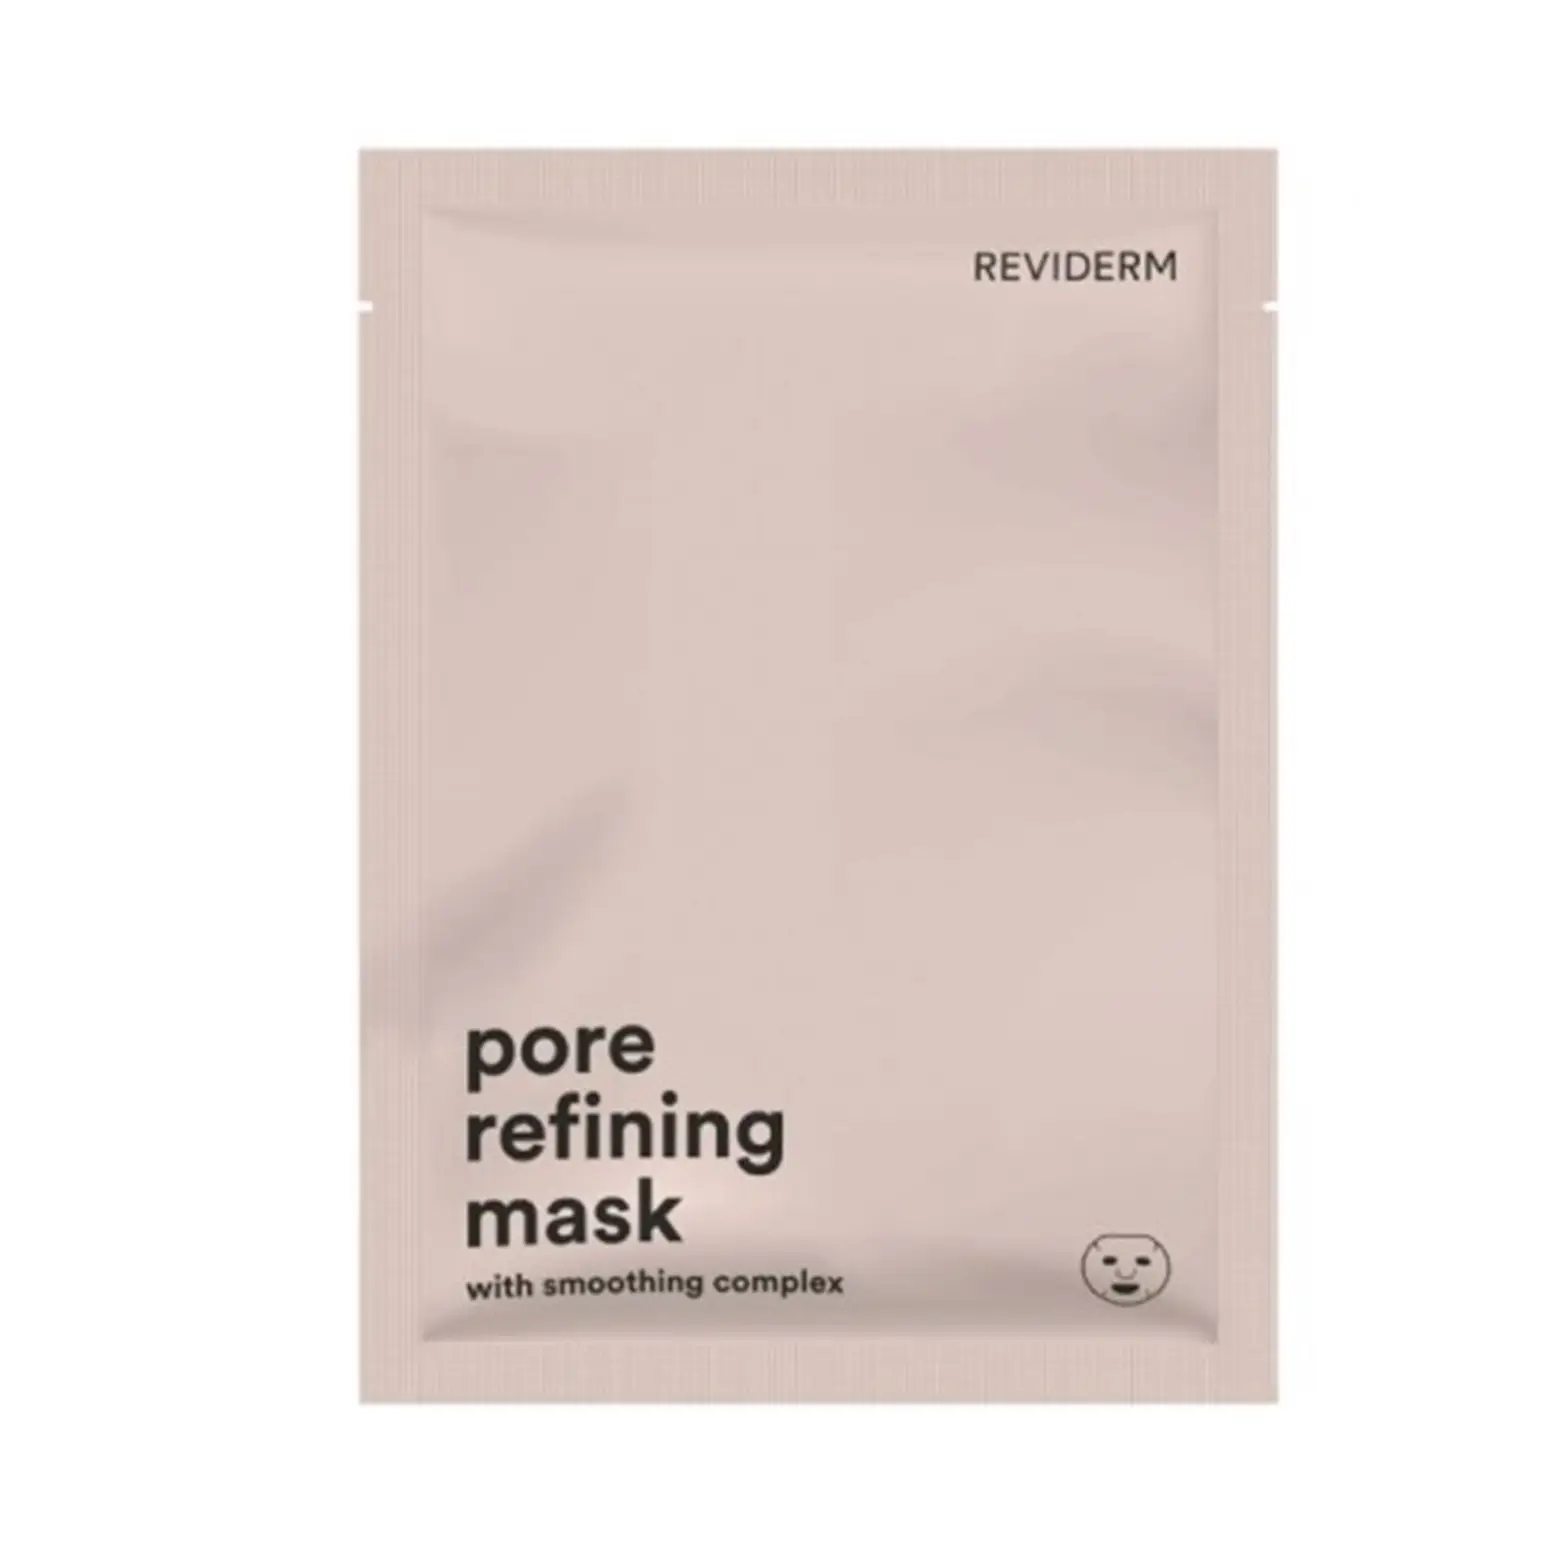 Reviderm Pore Refining Mask gezichtsmasker 1 stuk